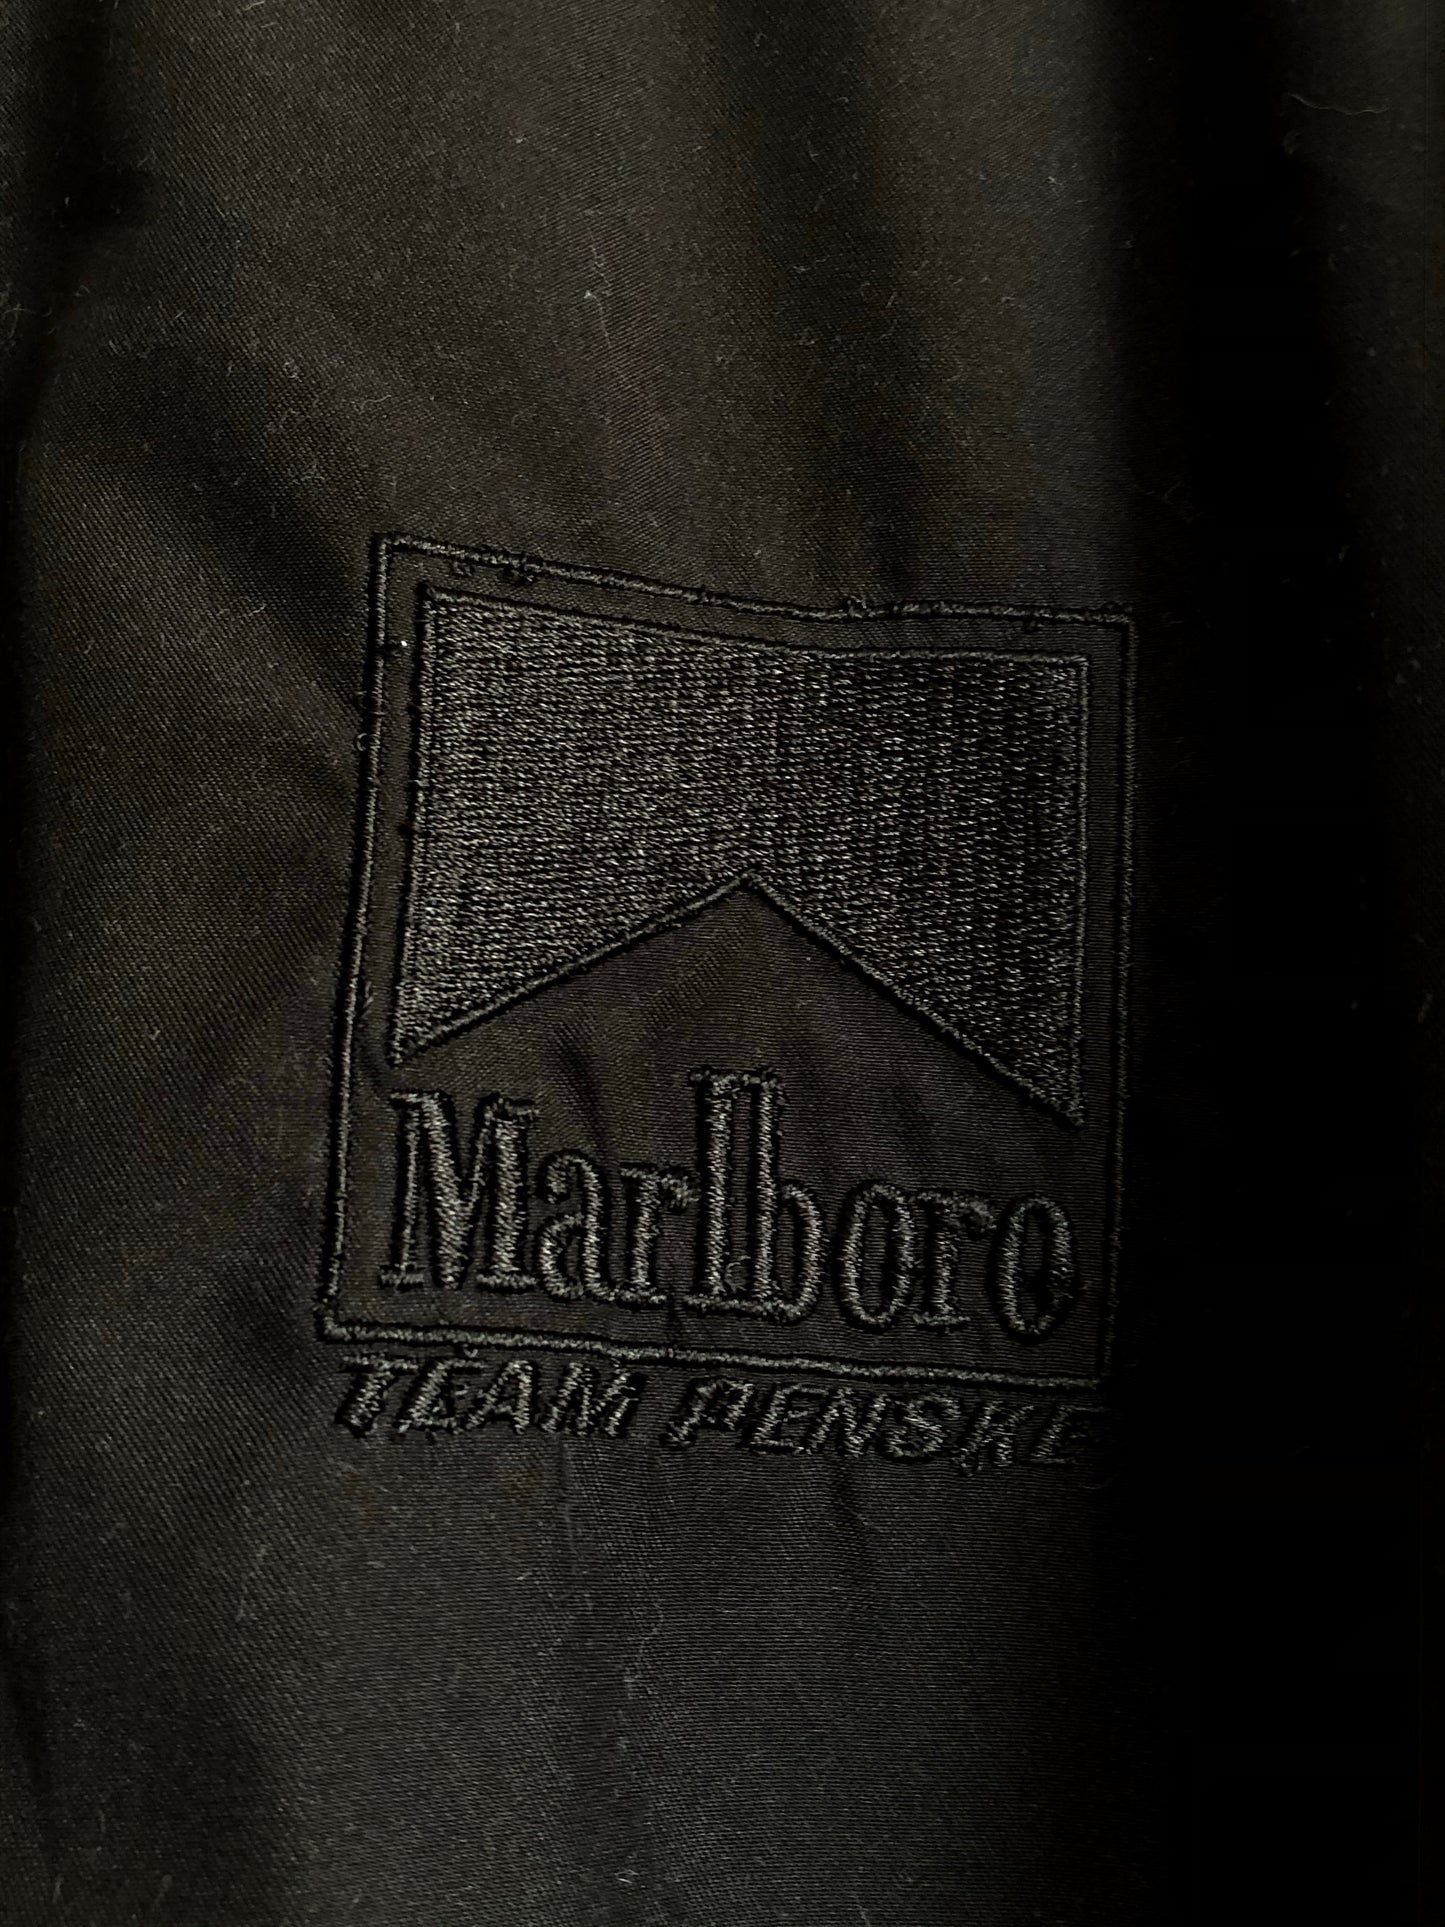 Marlboro sweatshirt